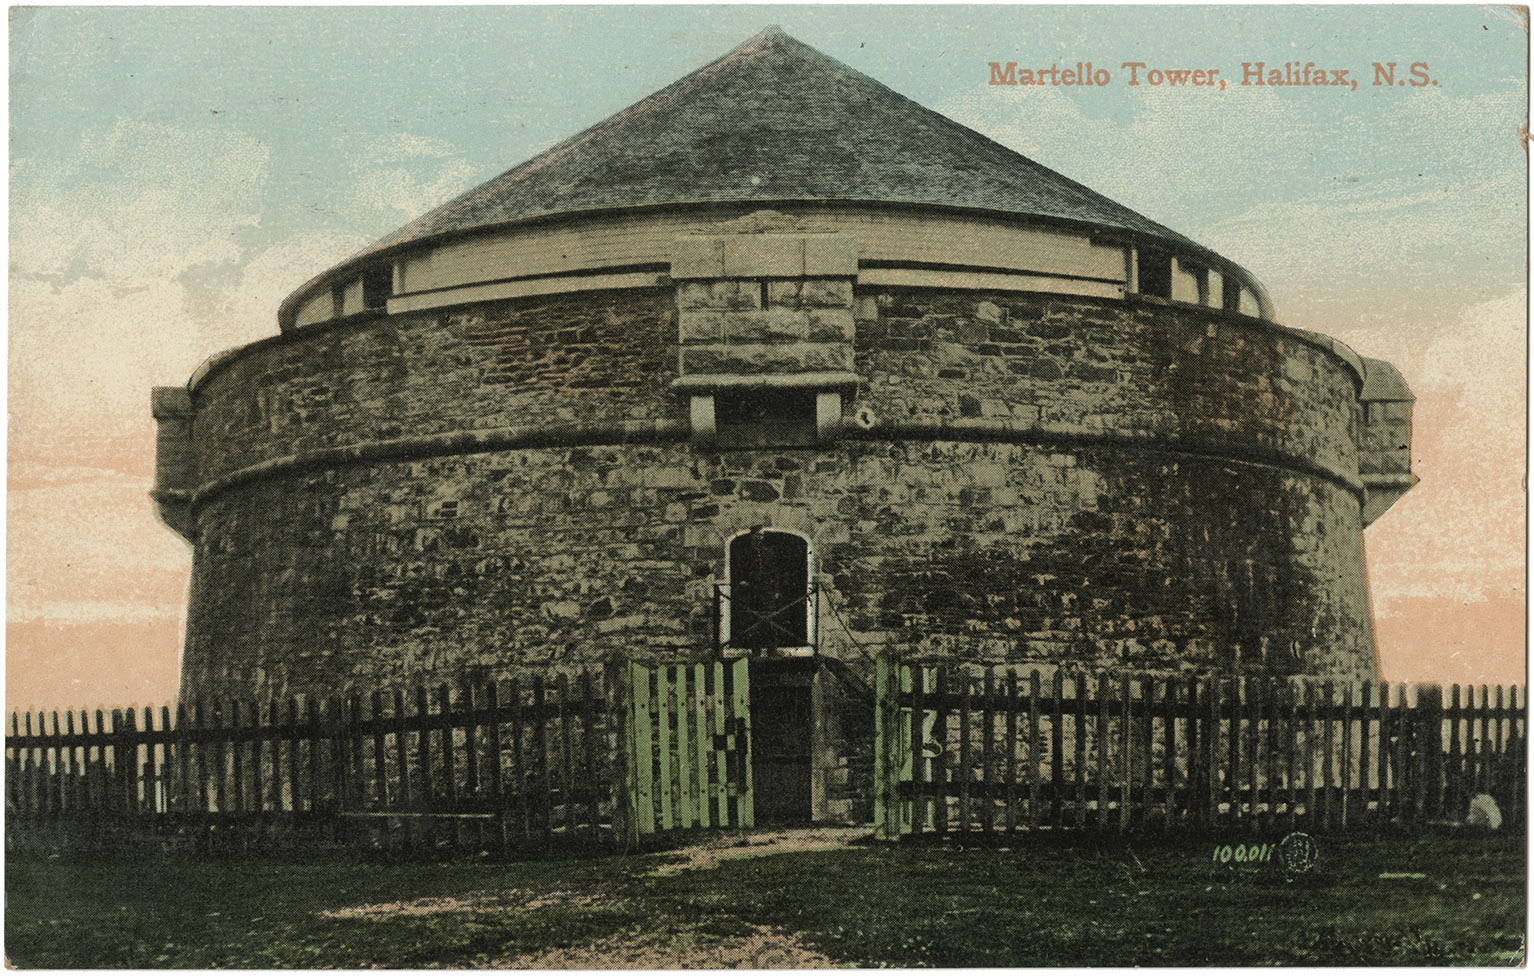 communityalbums - Martello Tower, Halifax, N.S.